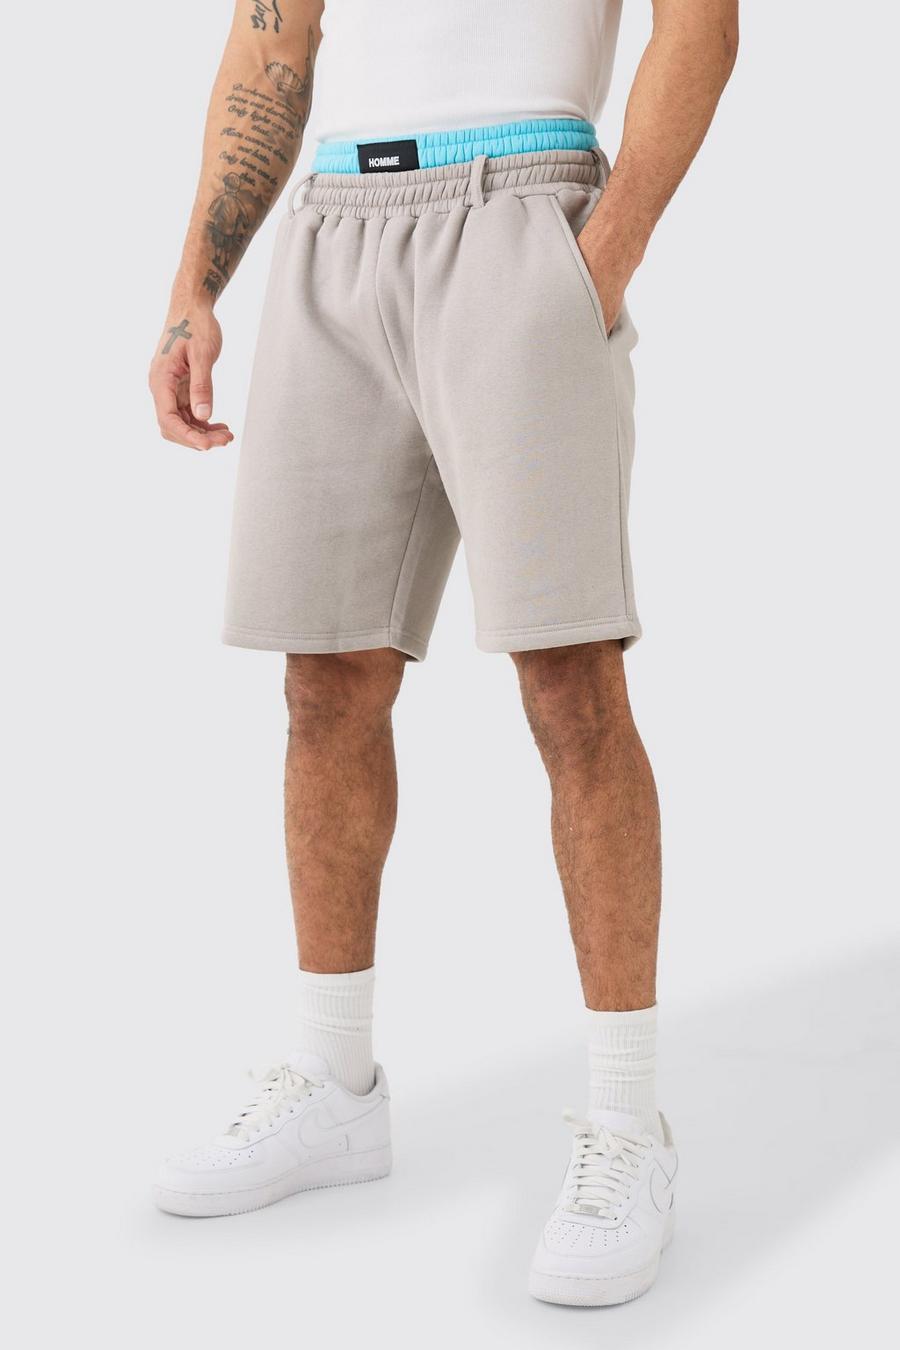 Lockere Shorts mit doppeltem Bund, Grey